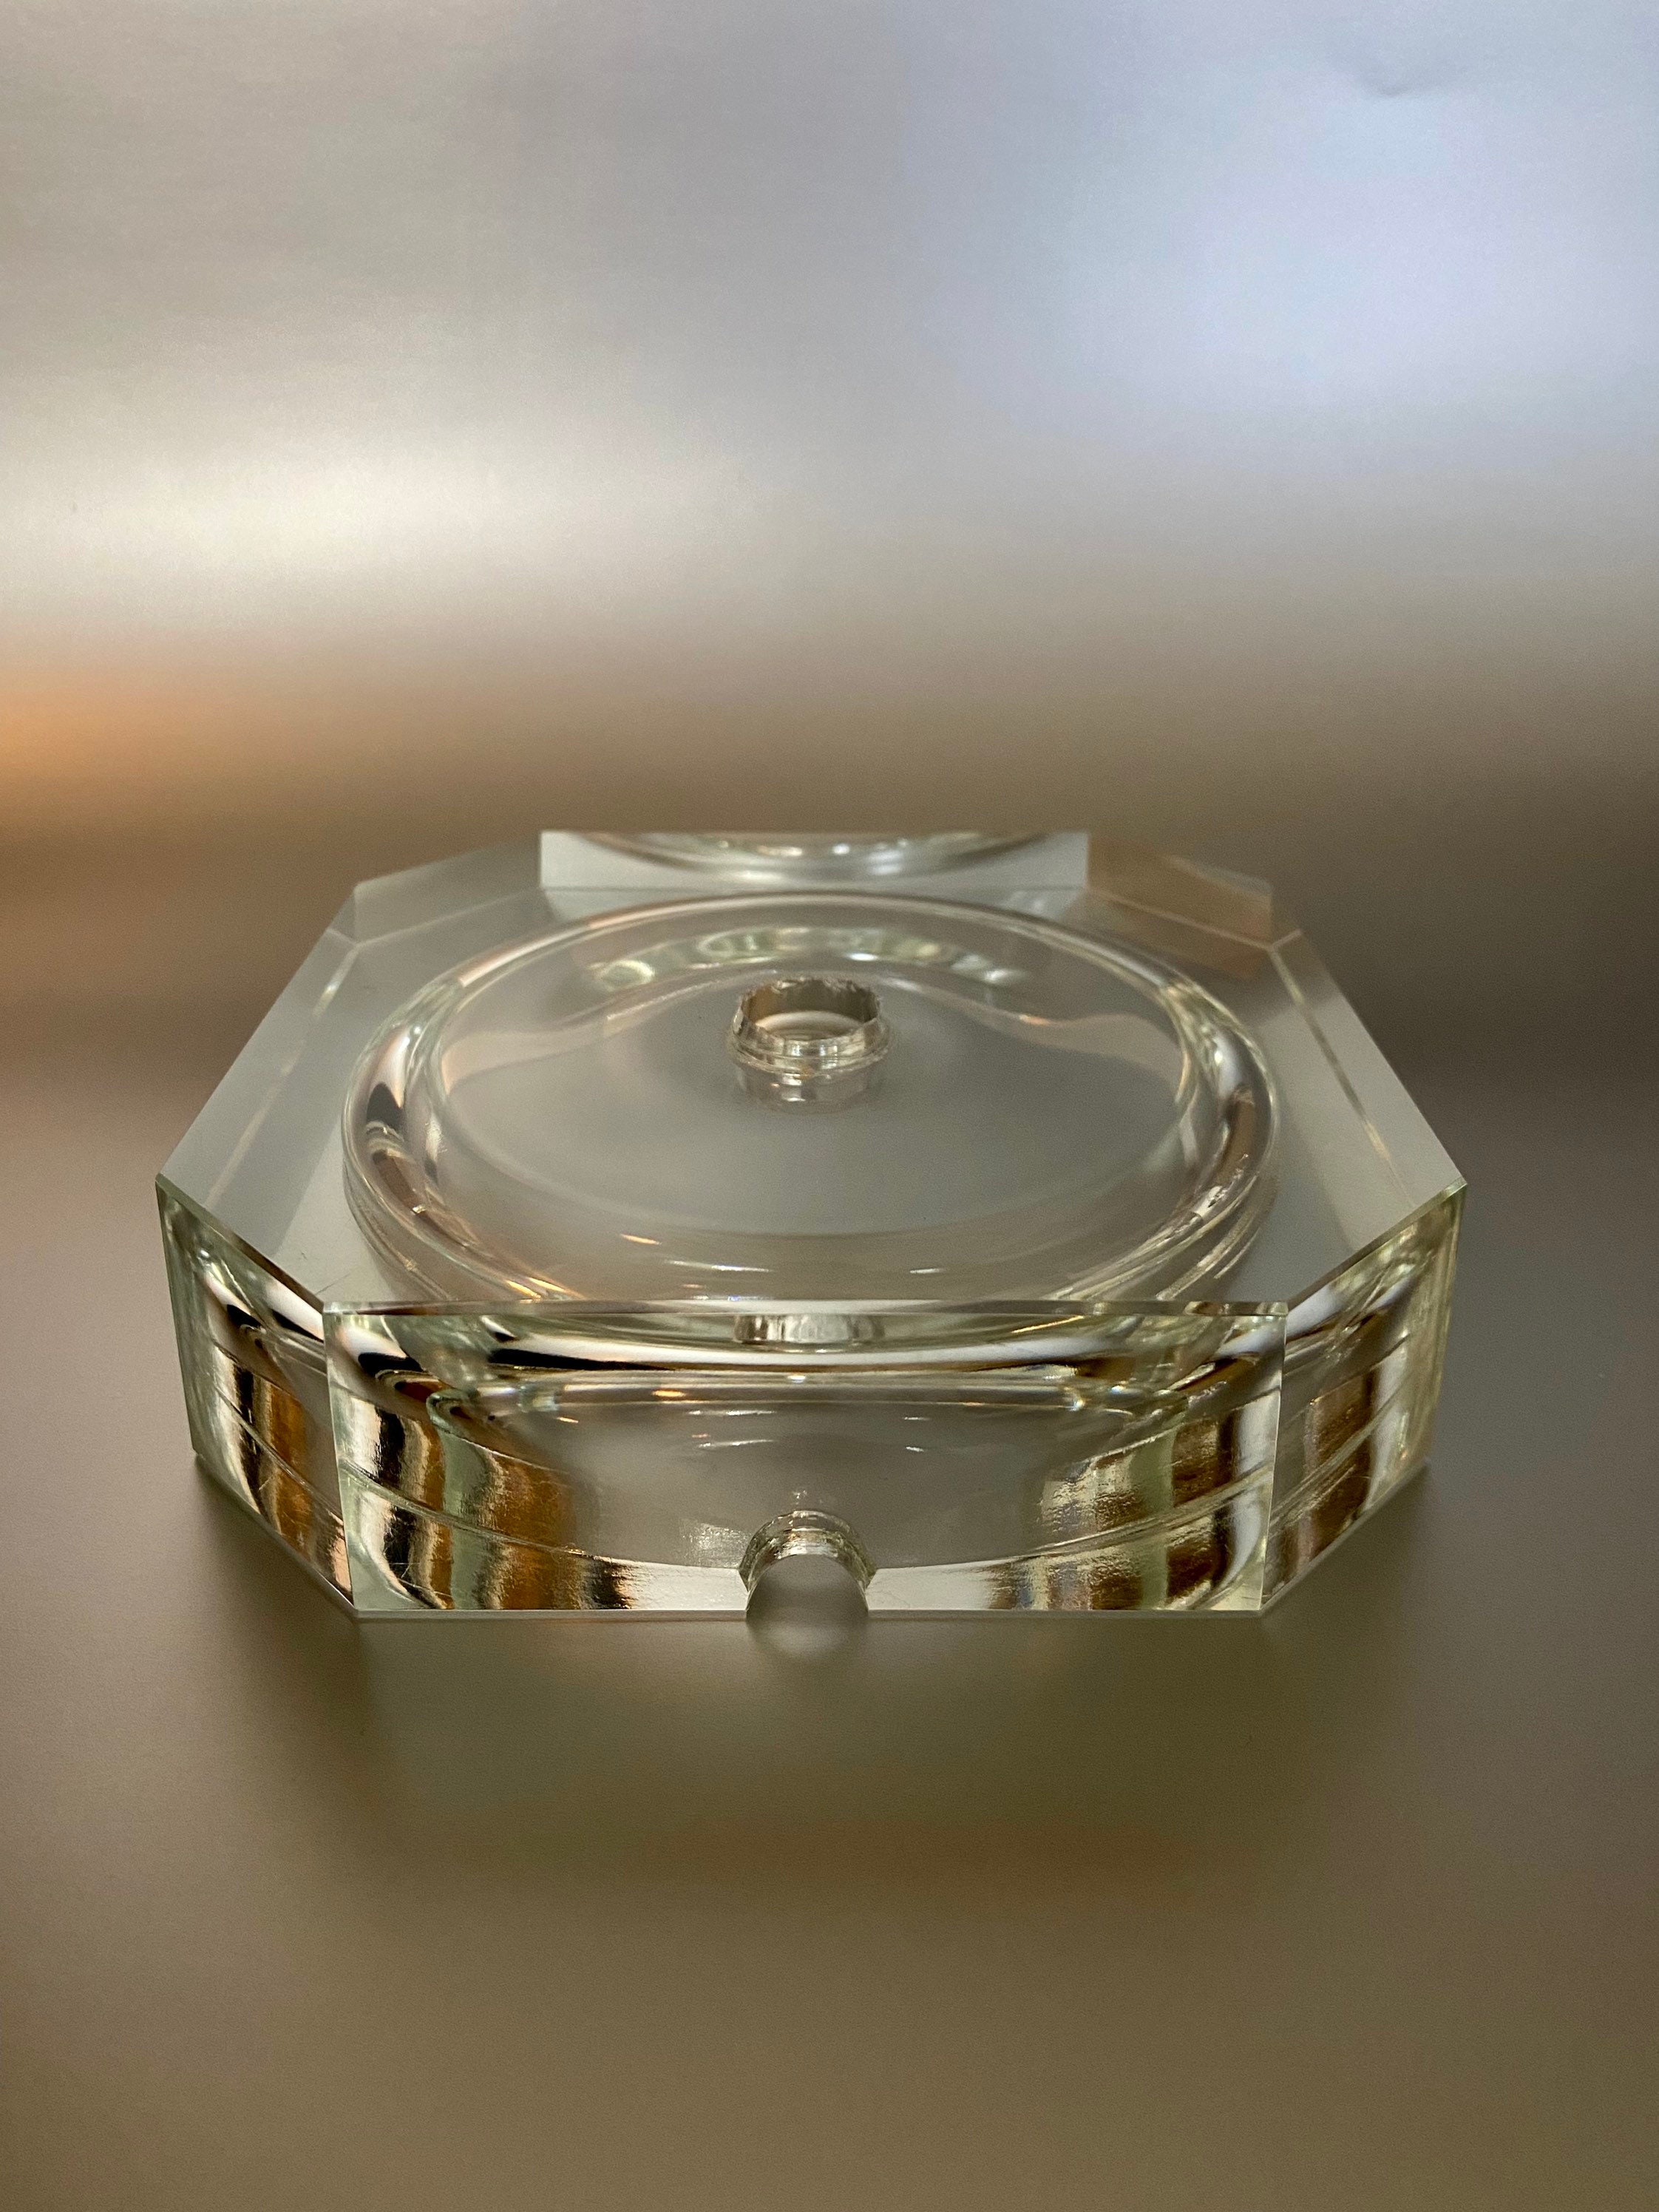 DRepair - Brand New LV & CC Mirror Lamp Crystal Table